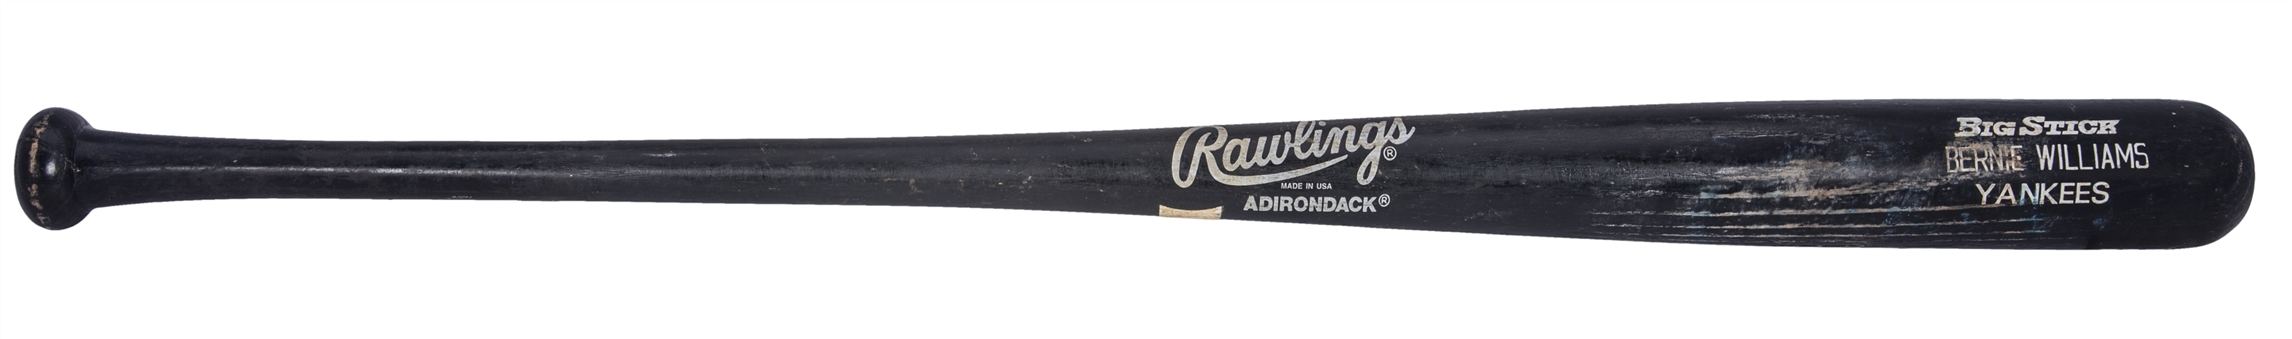 Circa 1996 Bernie Williams Yankees Game Used Rawlings Model Big Stick 433B Bat-World Champs Season (PSA/DNA GU 10)